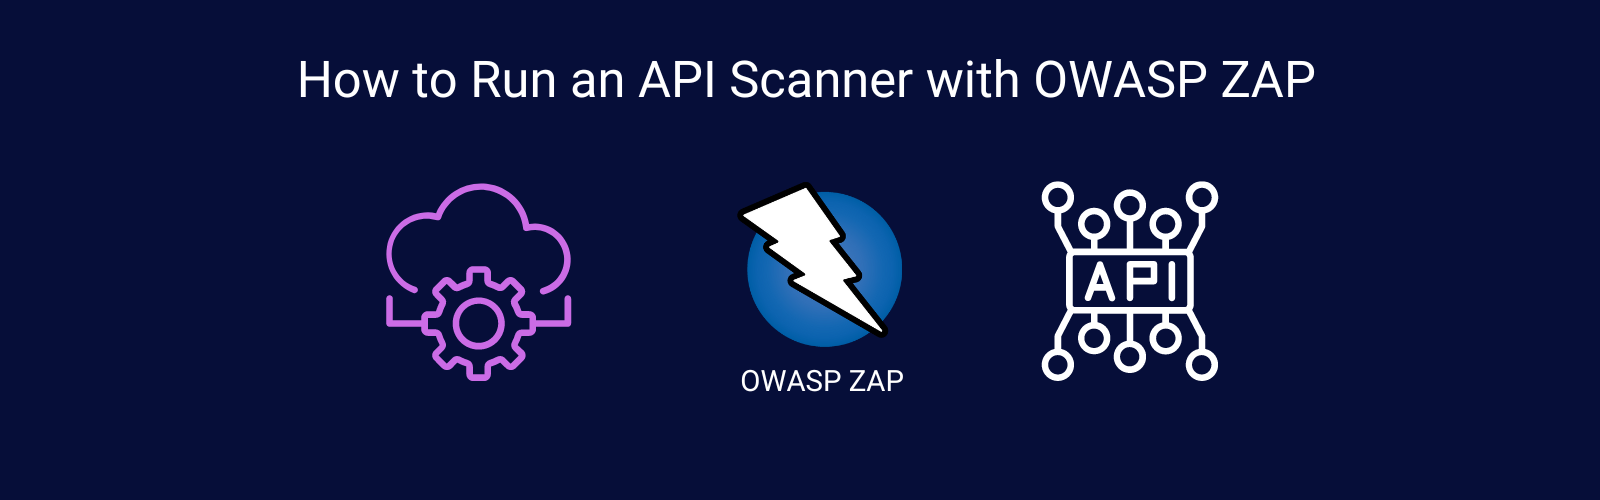 How to Run an API Scanner with OWASP ZAP main image